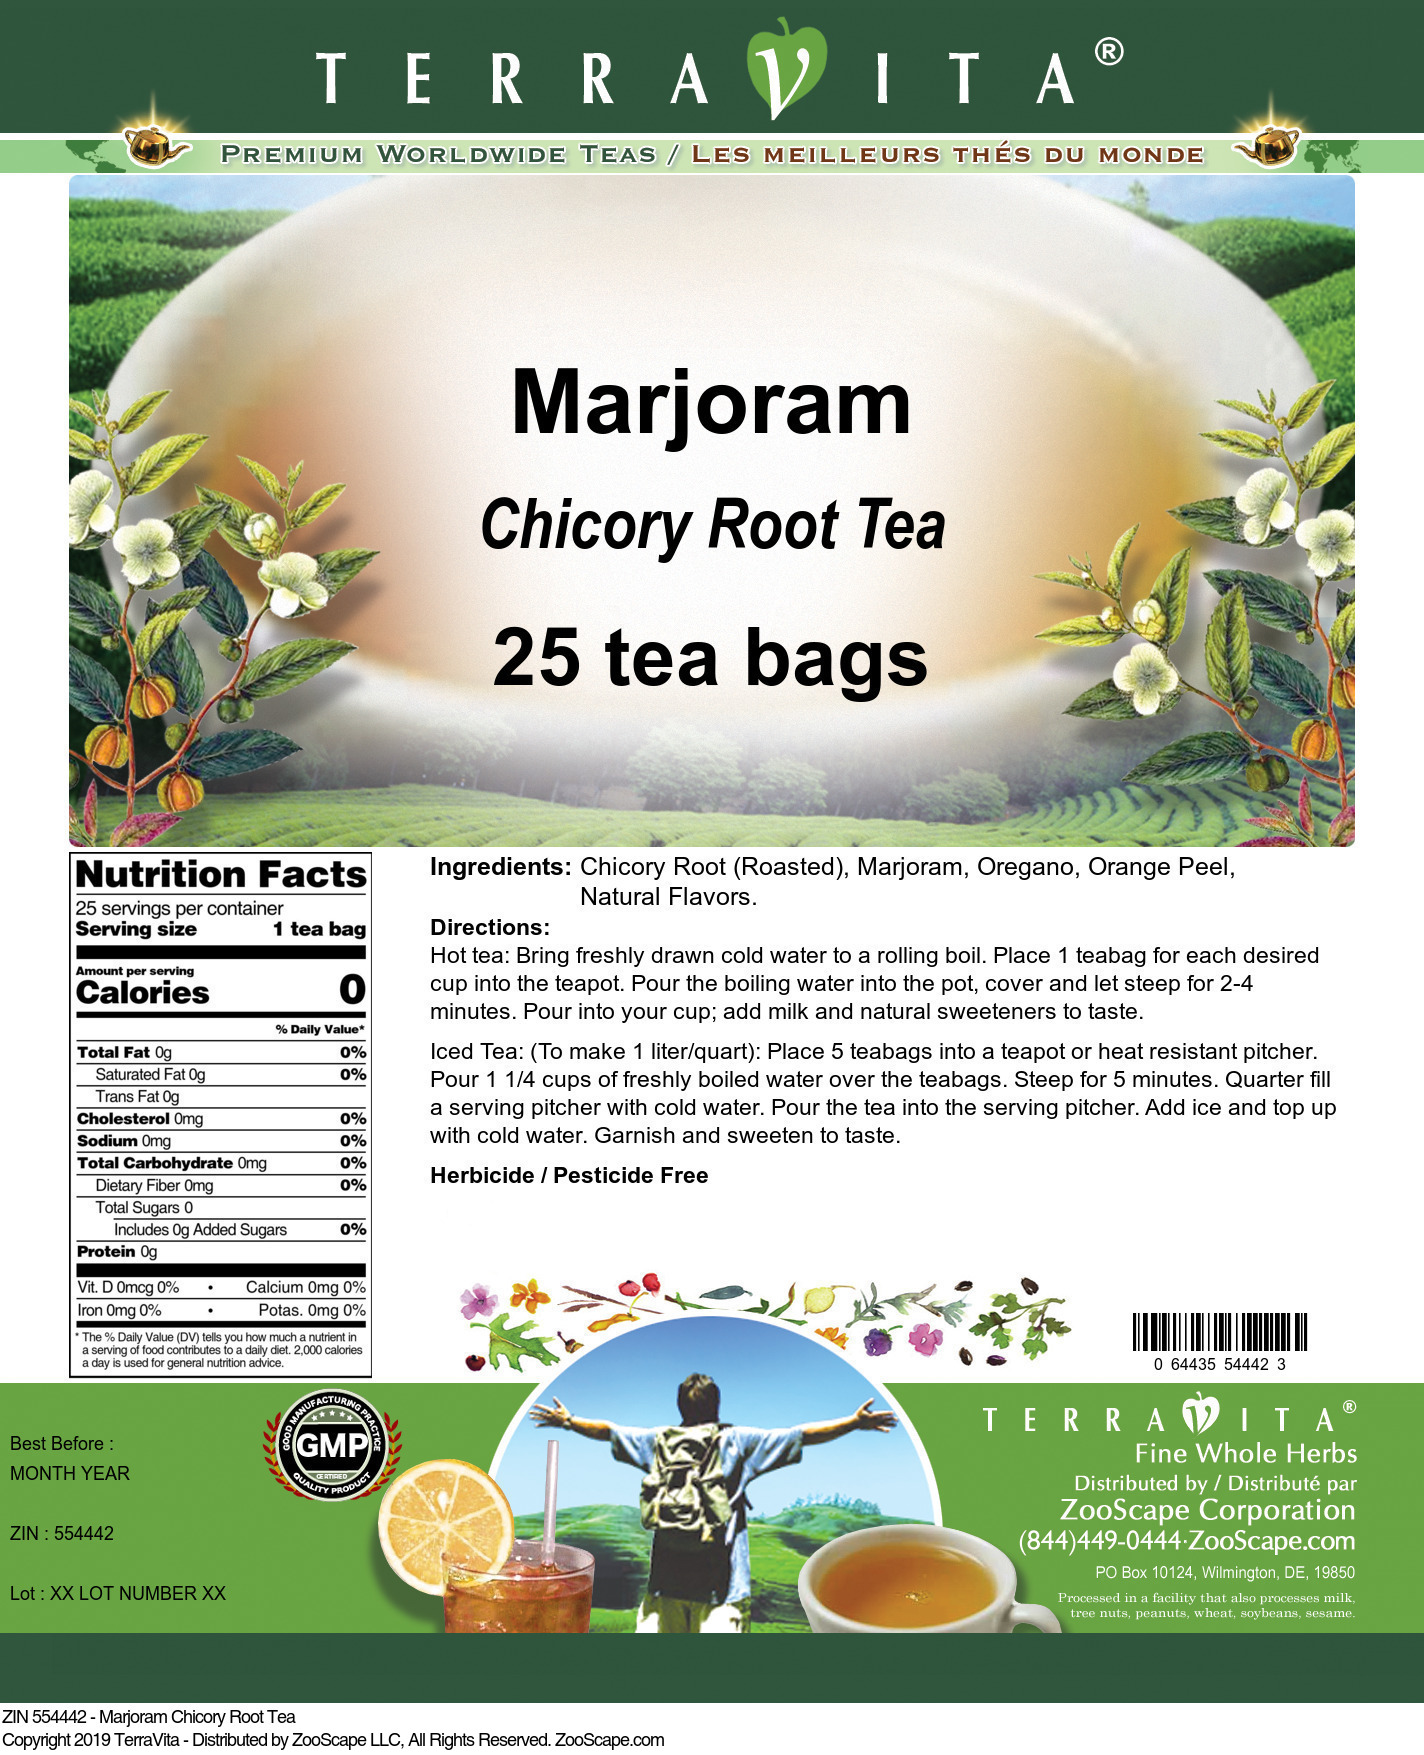 Marjoram Chicory Root Tea - Label